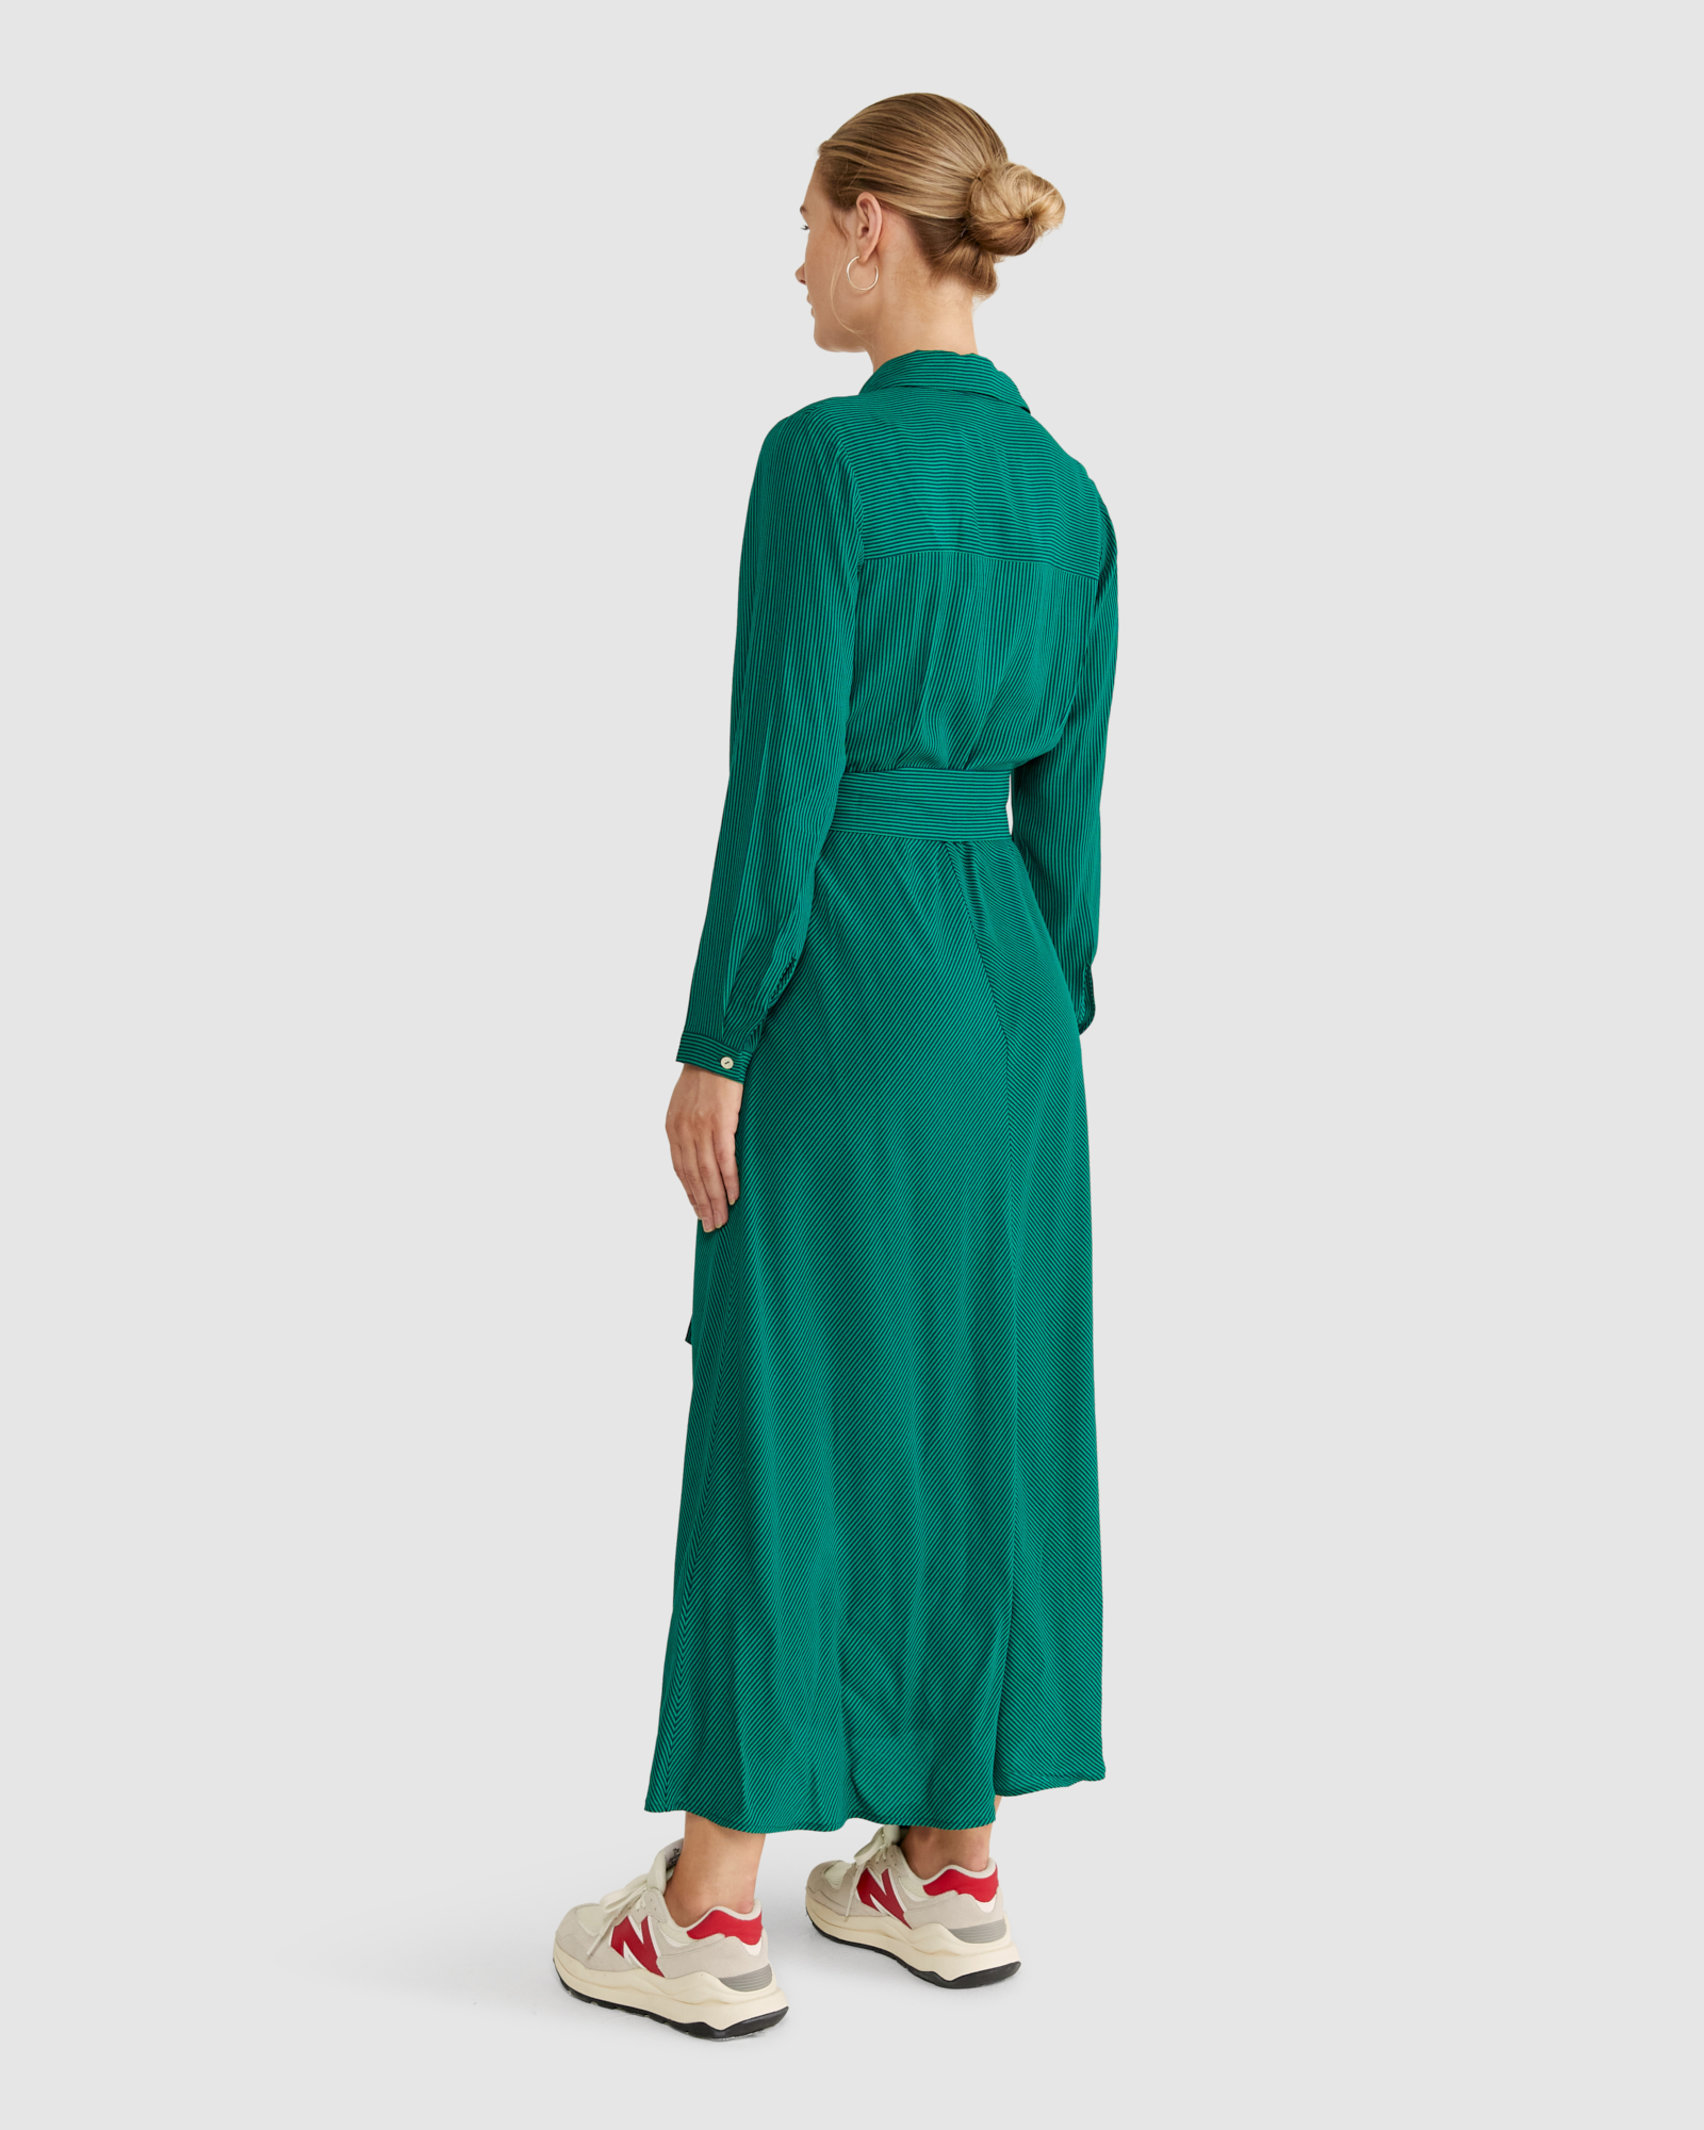 Hildi Heritage Dress in NAVY/GREEN